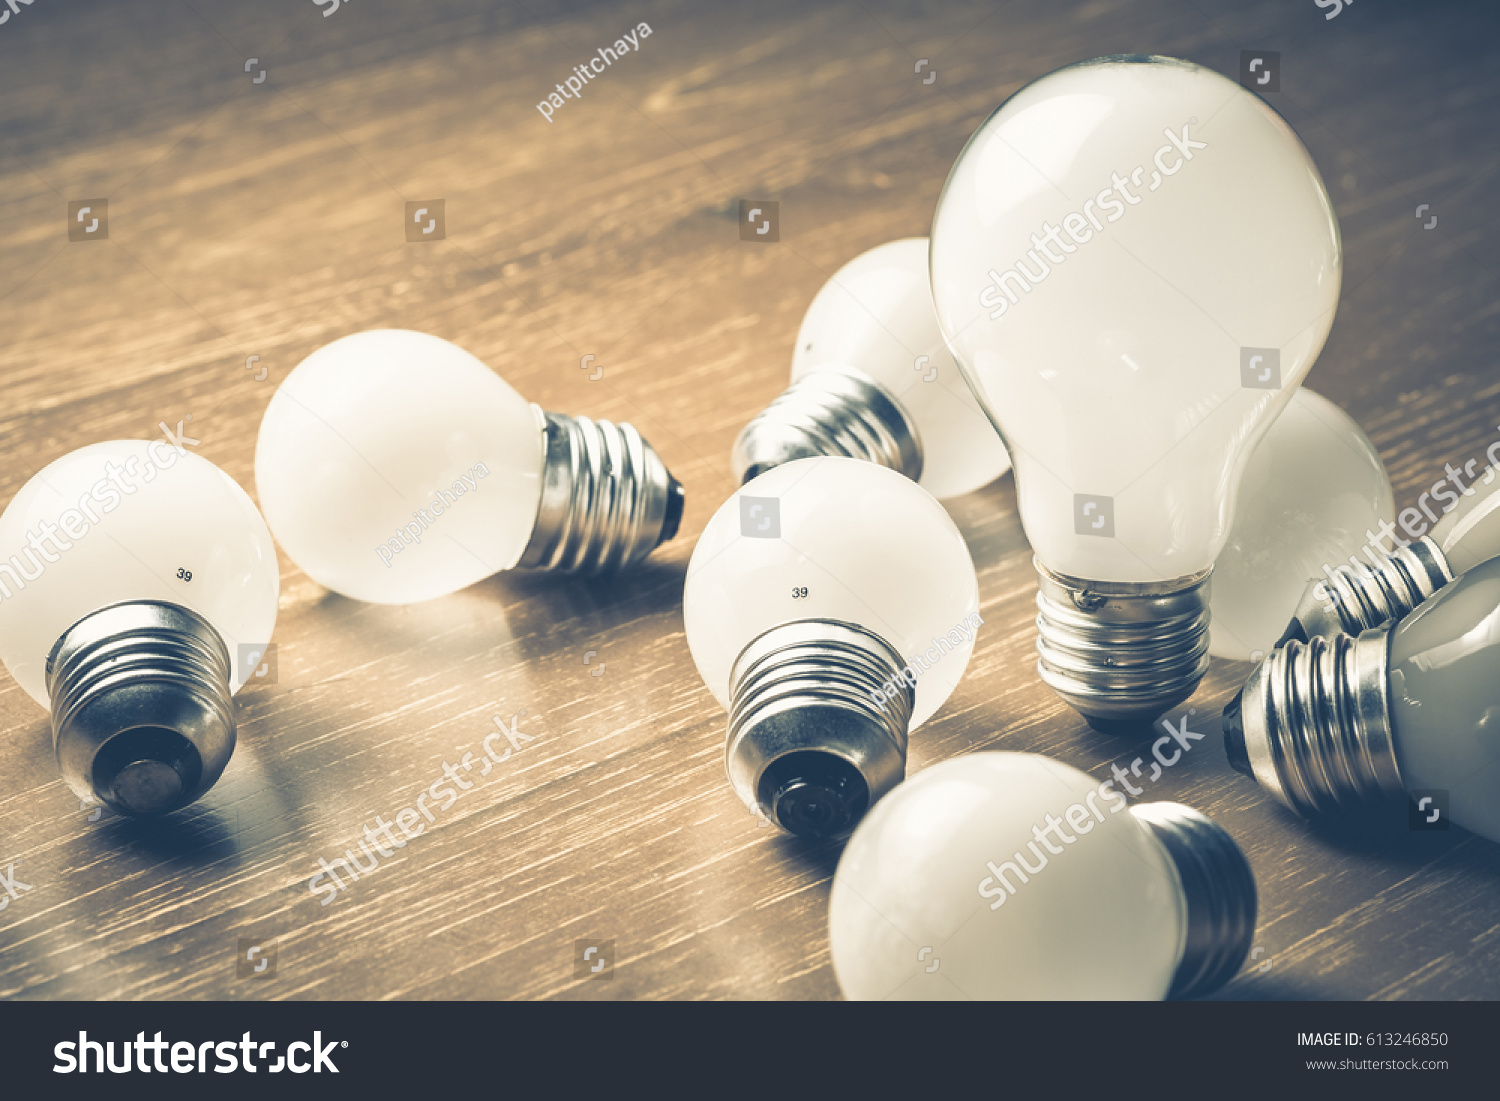 Bigger light bulb among the small ones #613246850